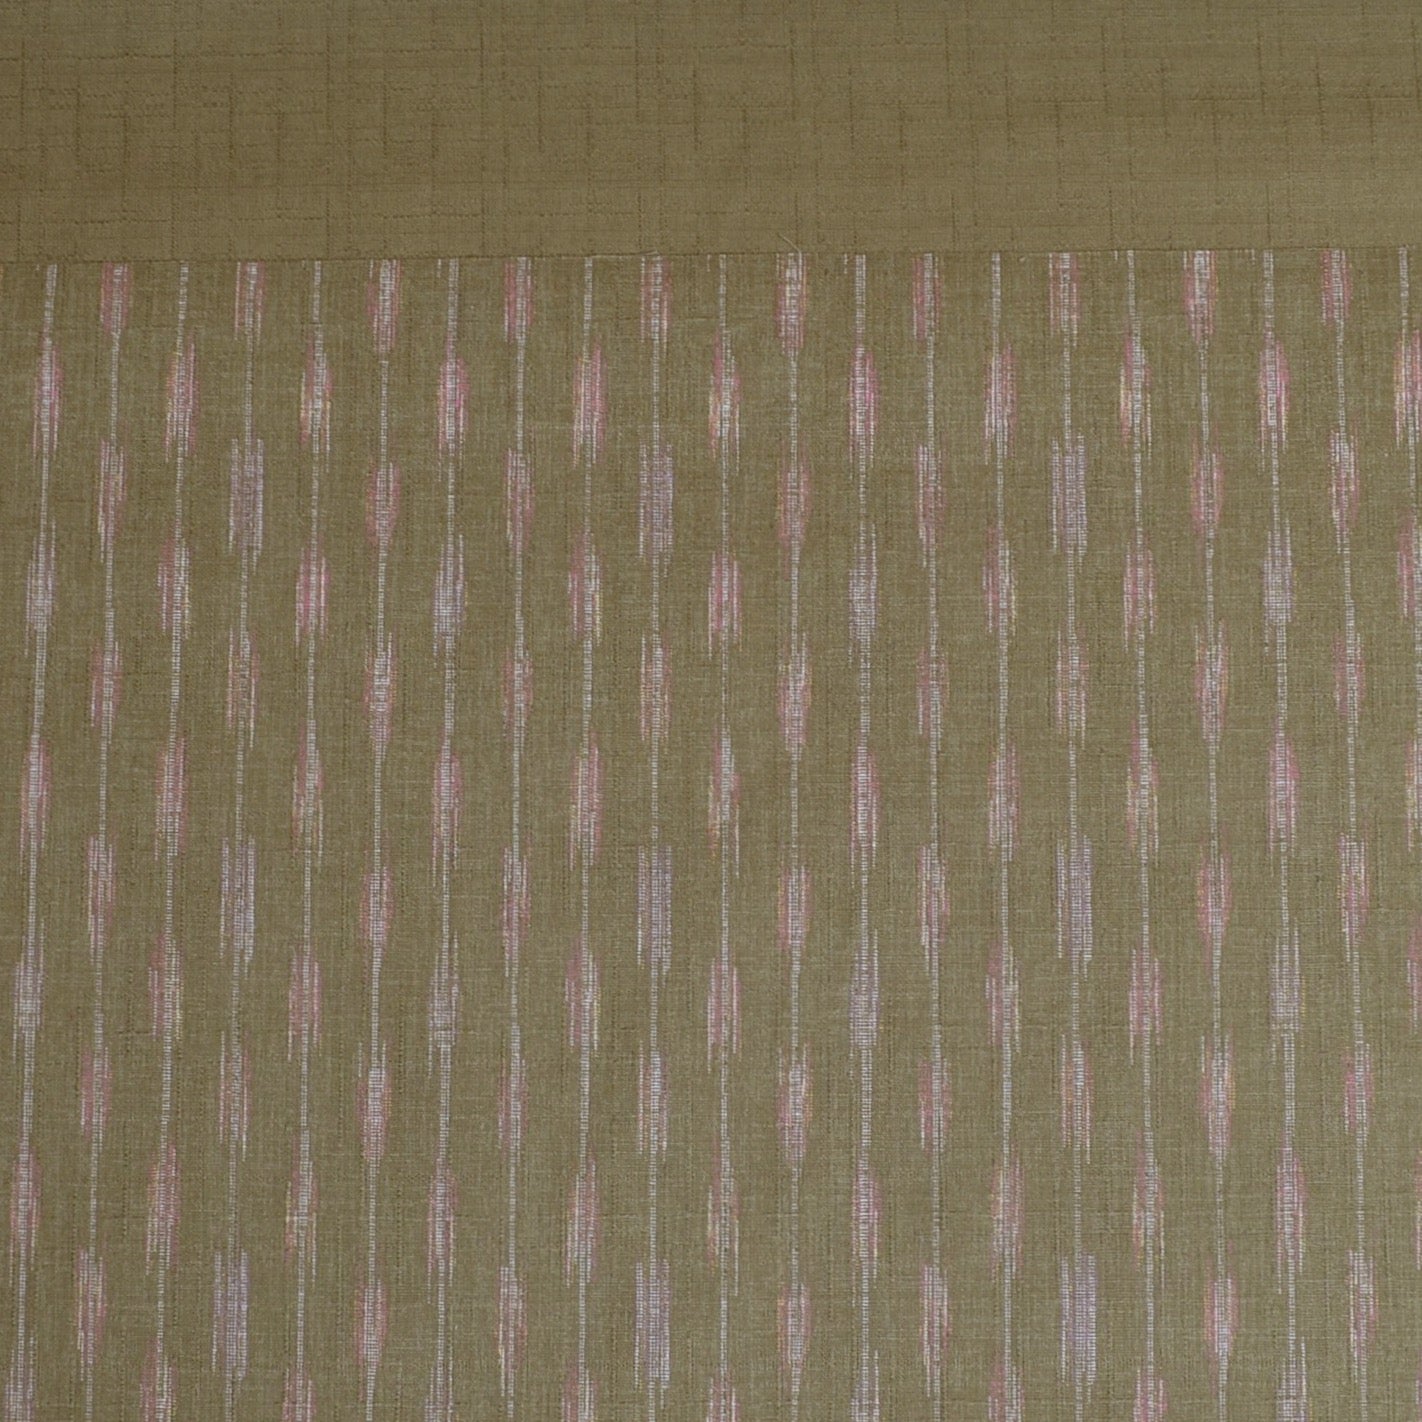 Japanese cotton dobby print fabric